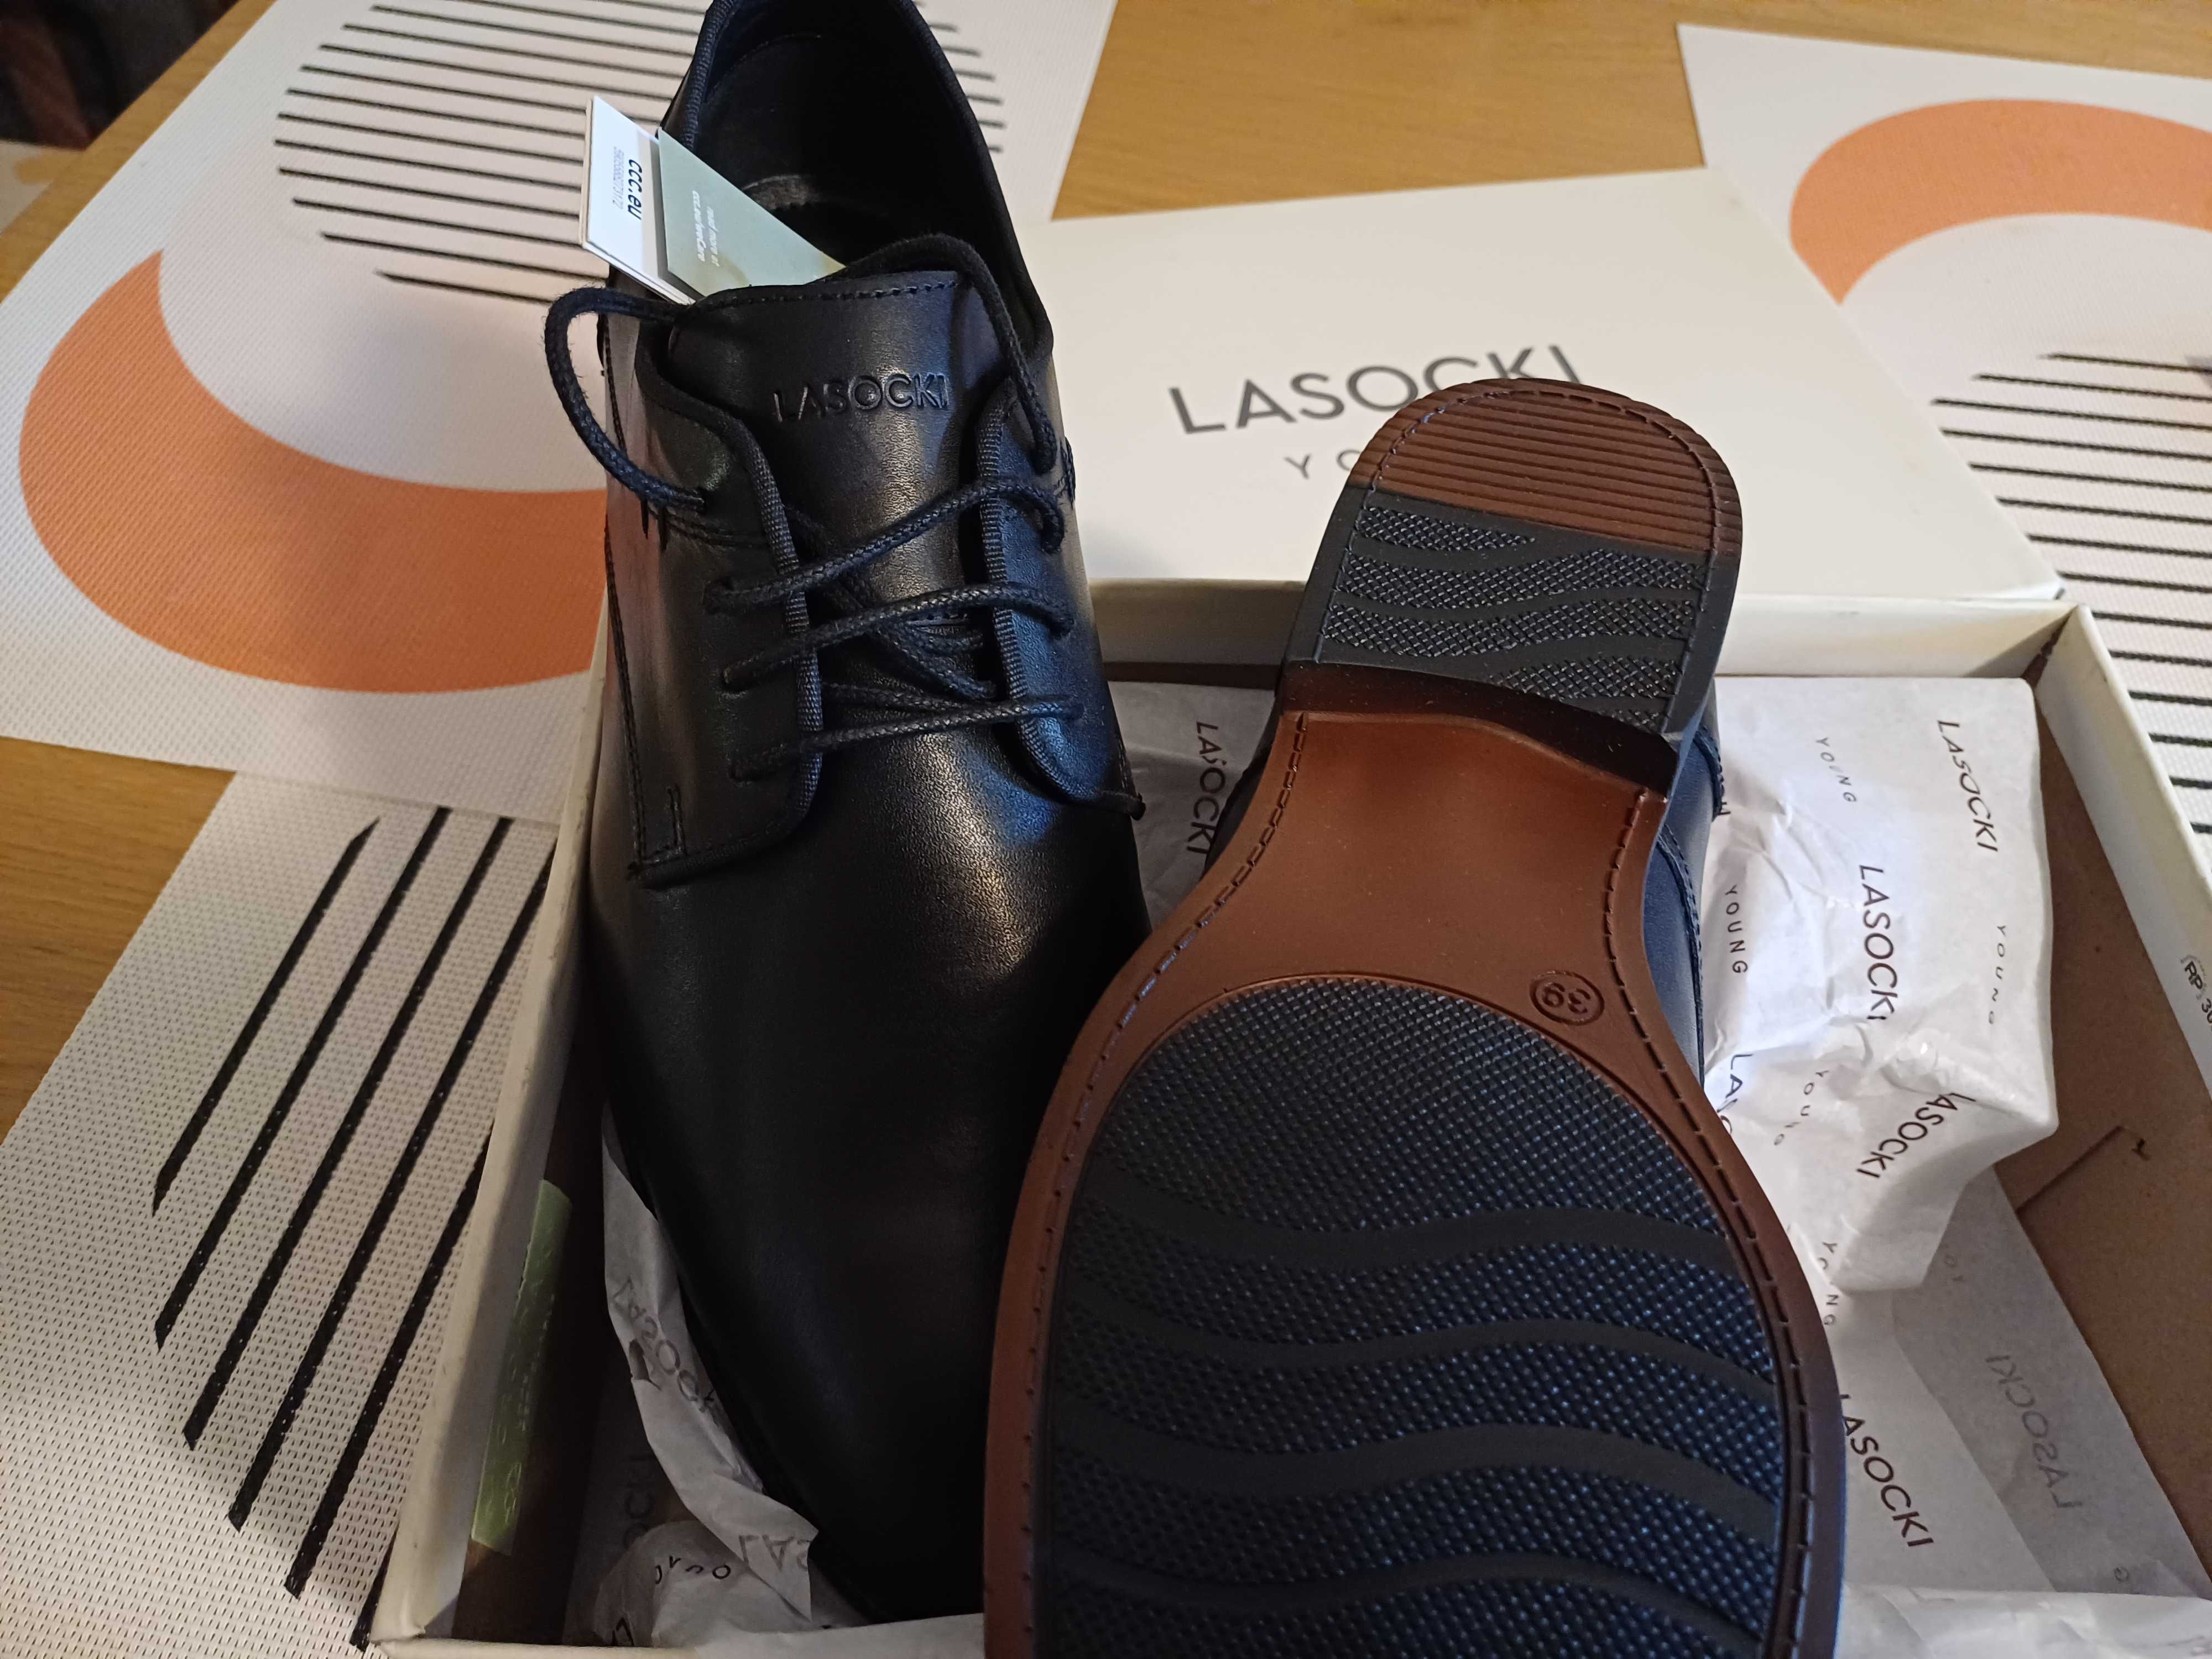 Buty Lasocki - nowe!